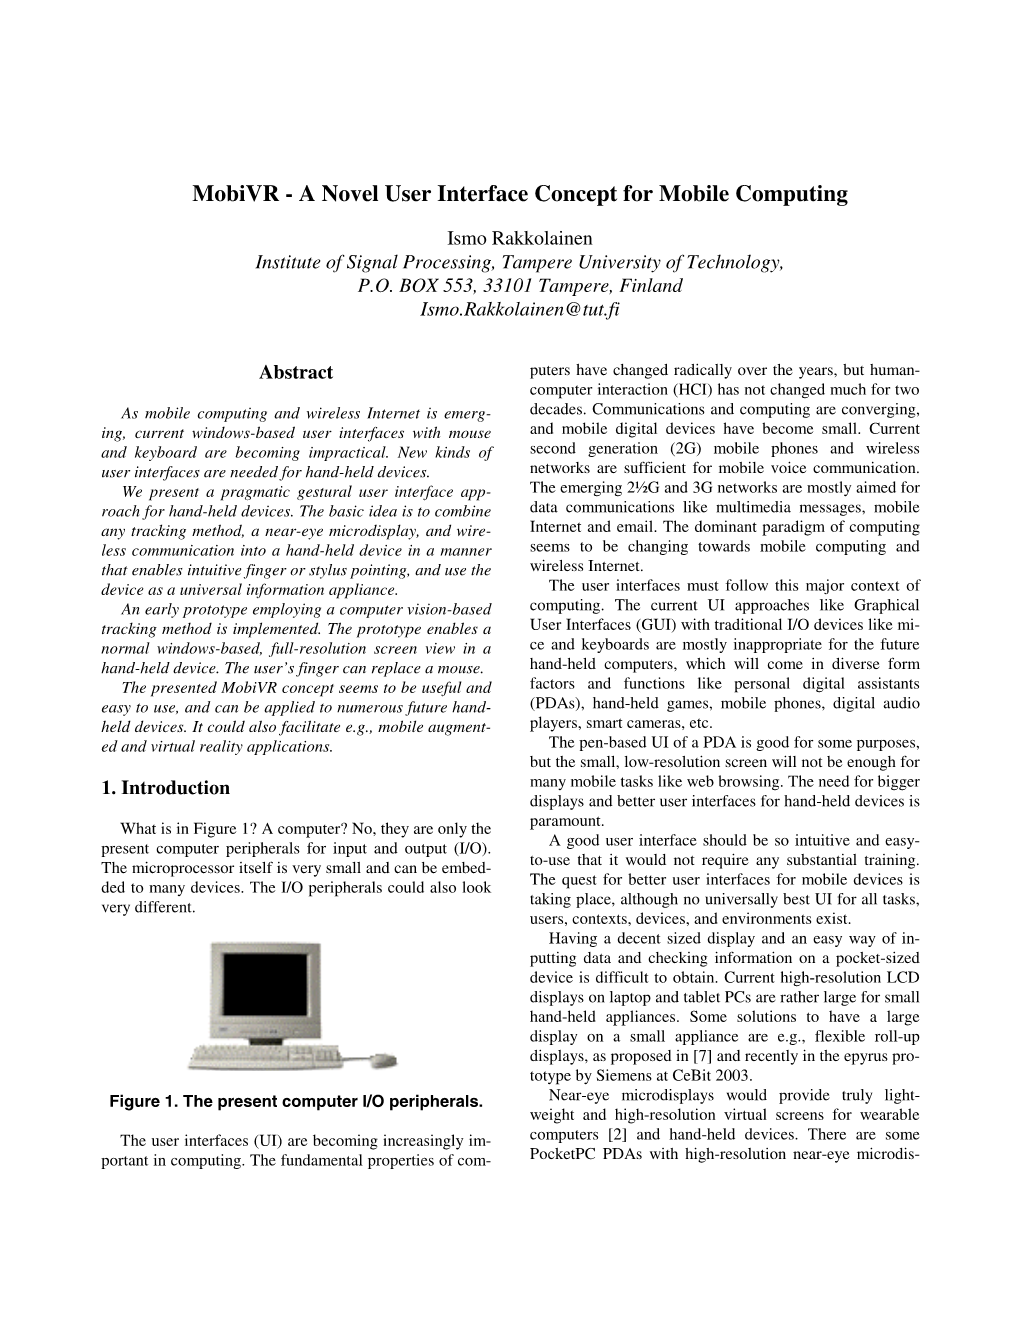 Mobivr - a Novel User Interface Concept for Mobile Computing